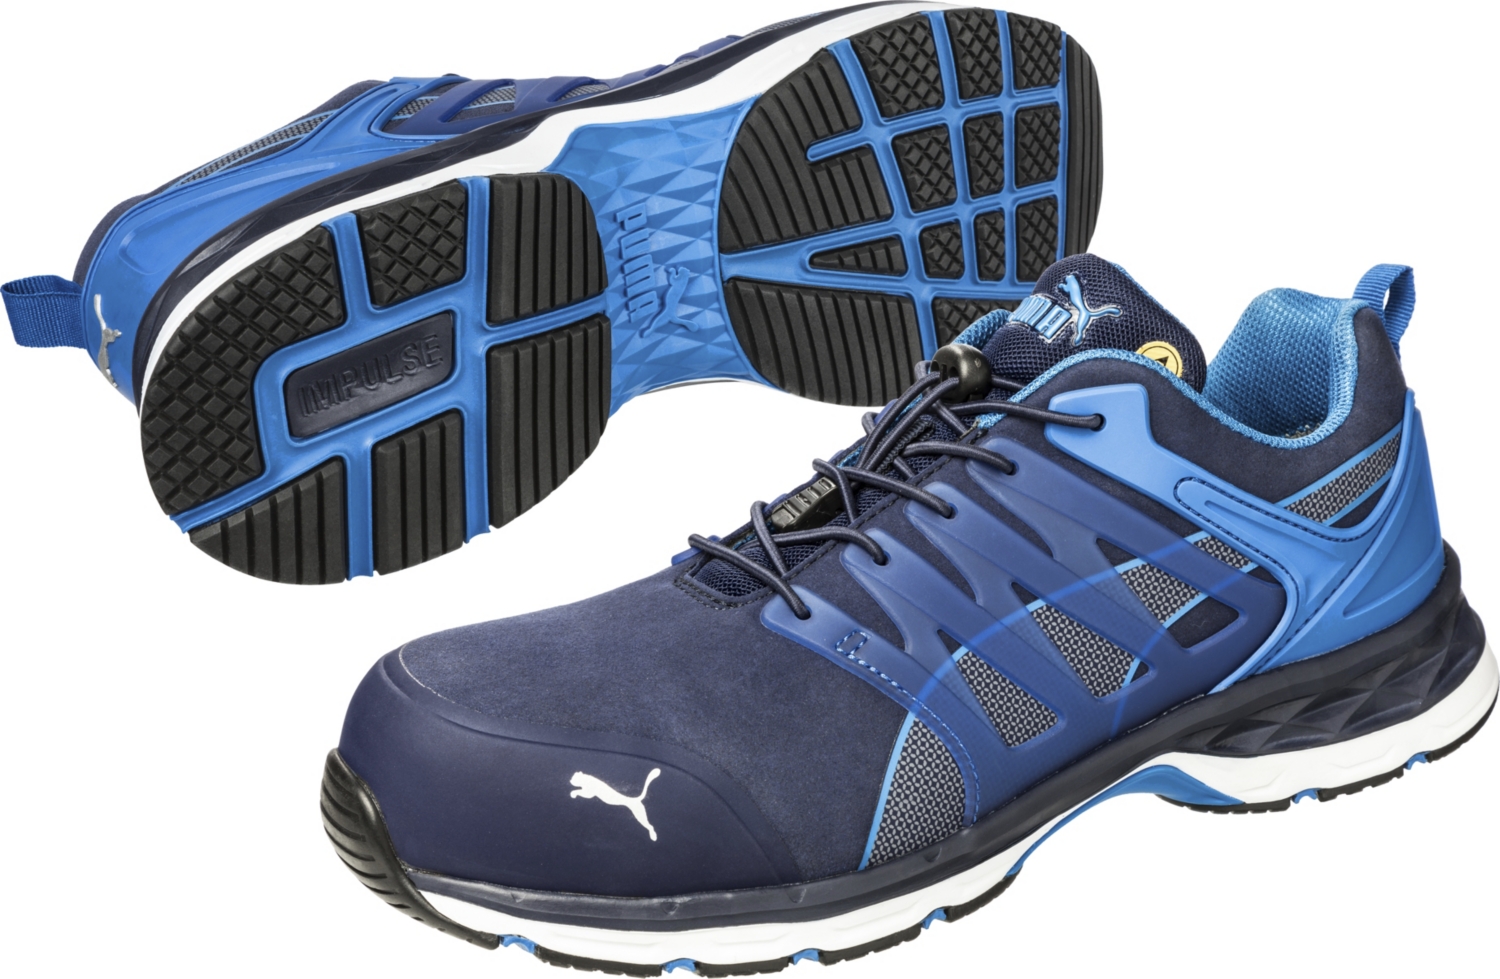  Chaussures basses Velocity - Bleu - S1P ESD HRO SRC 